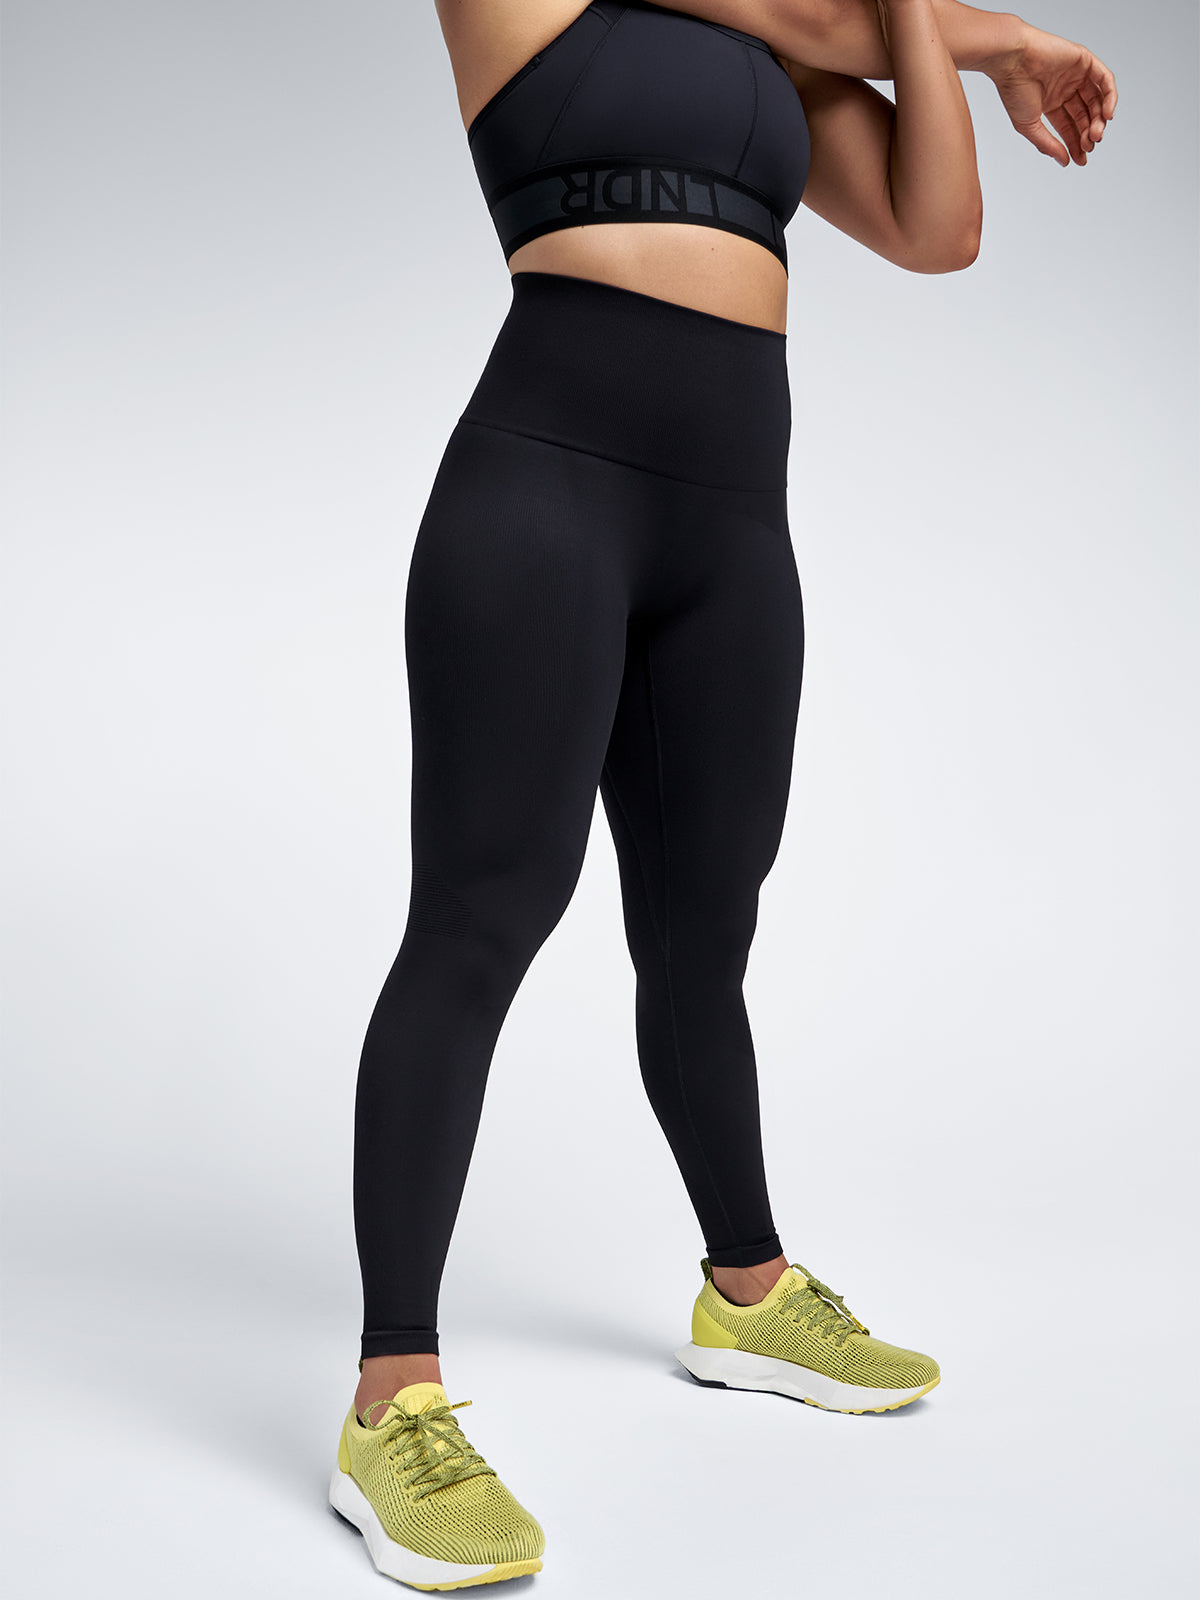 Workout Leggings for Women Black – Wisunny